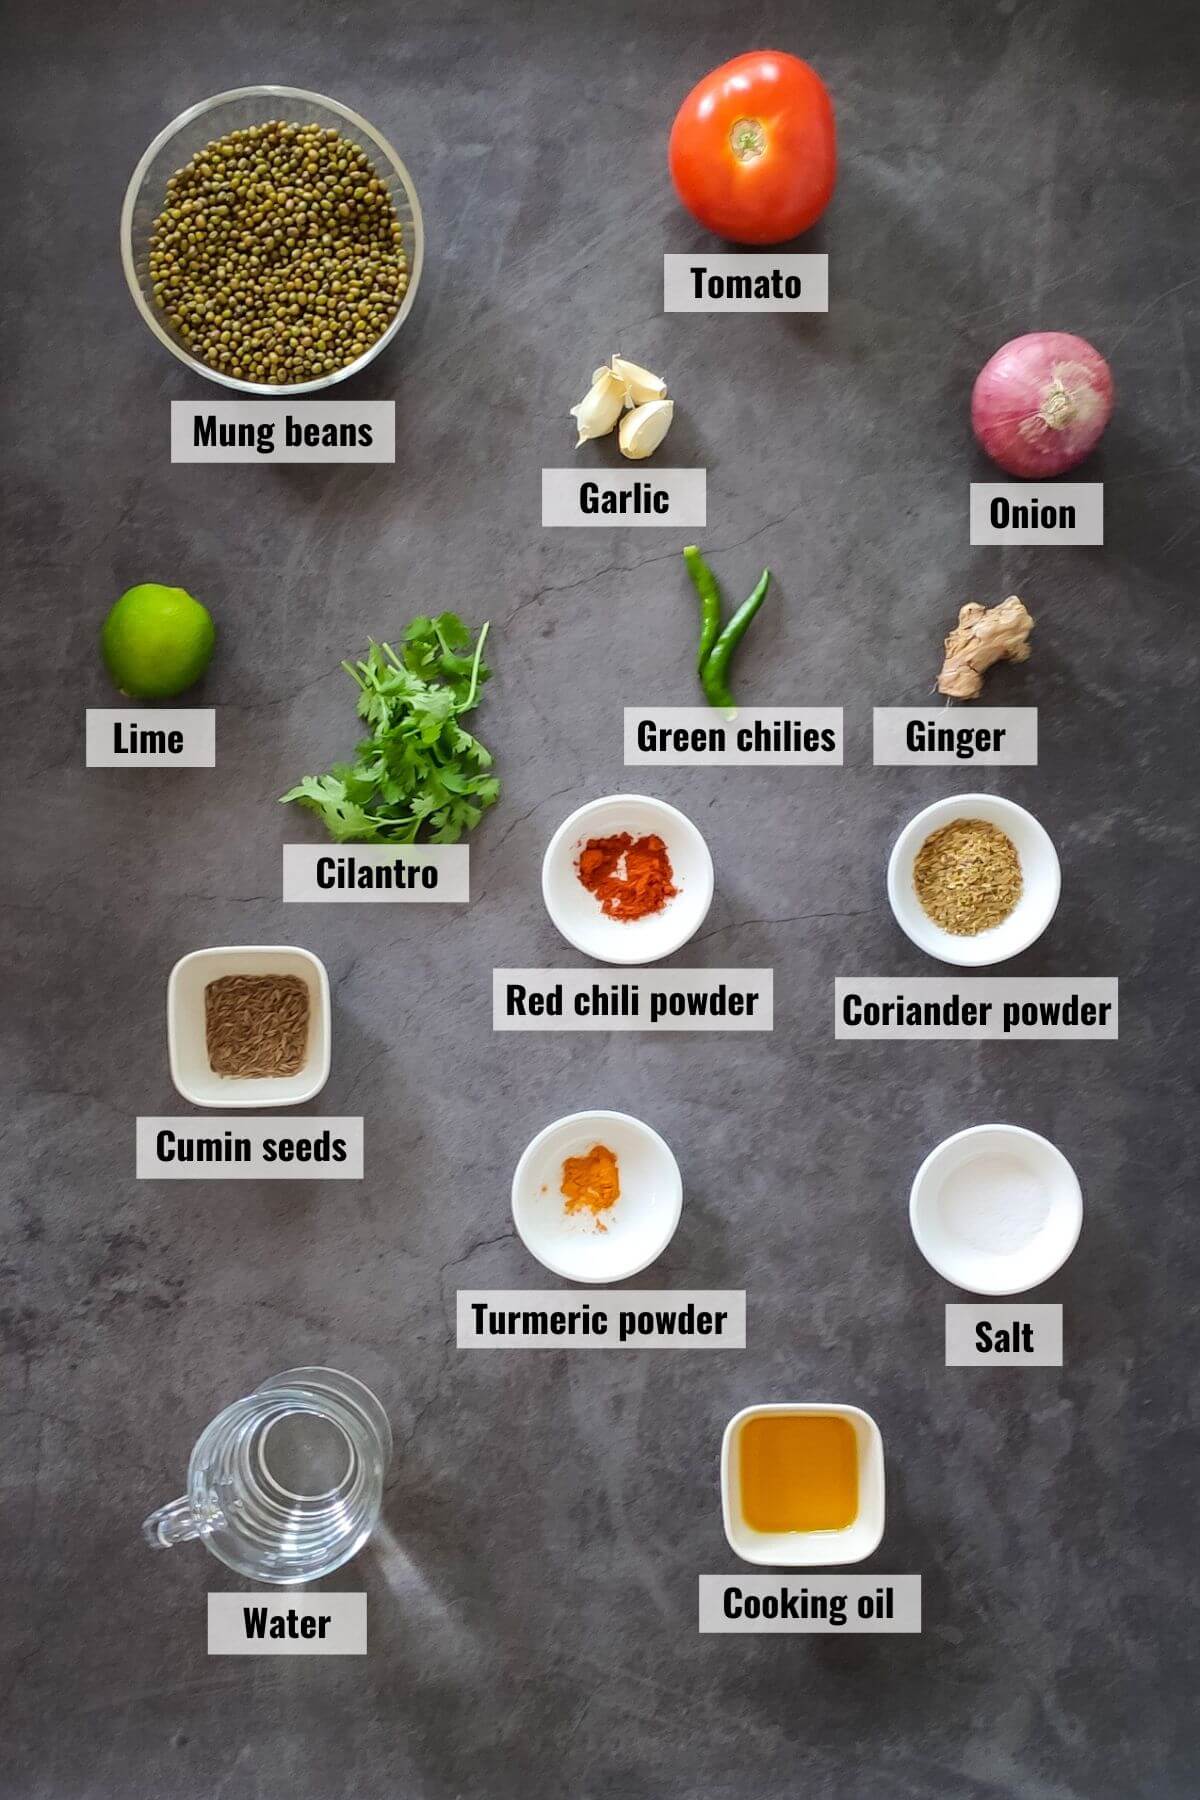 Ingredients for sabut moong dal labelled